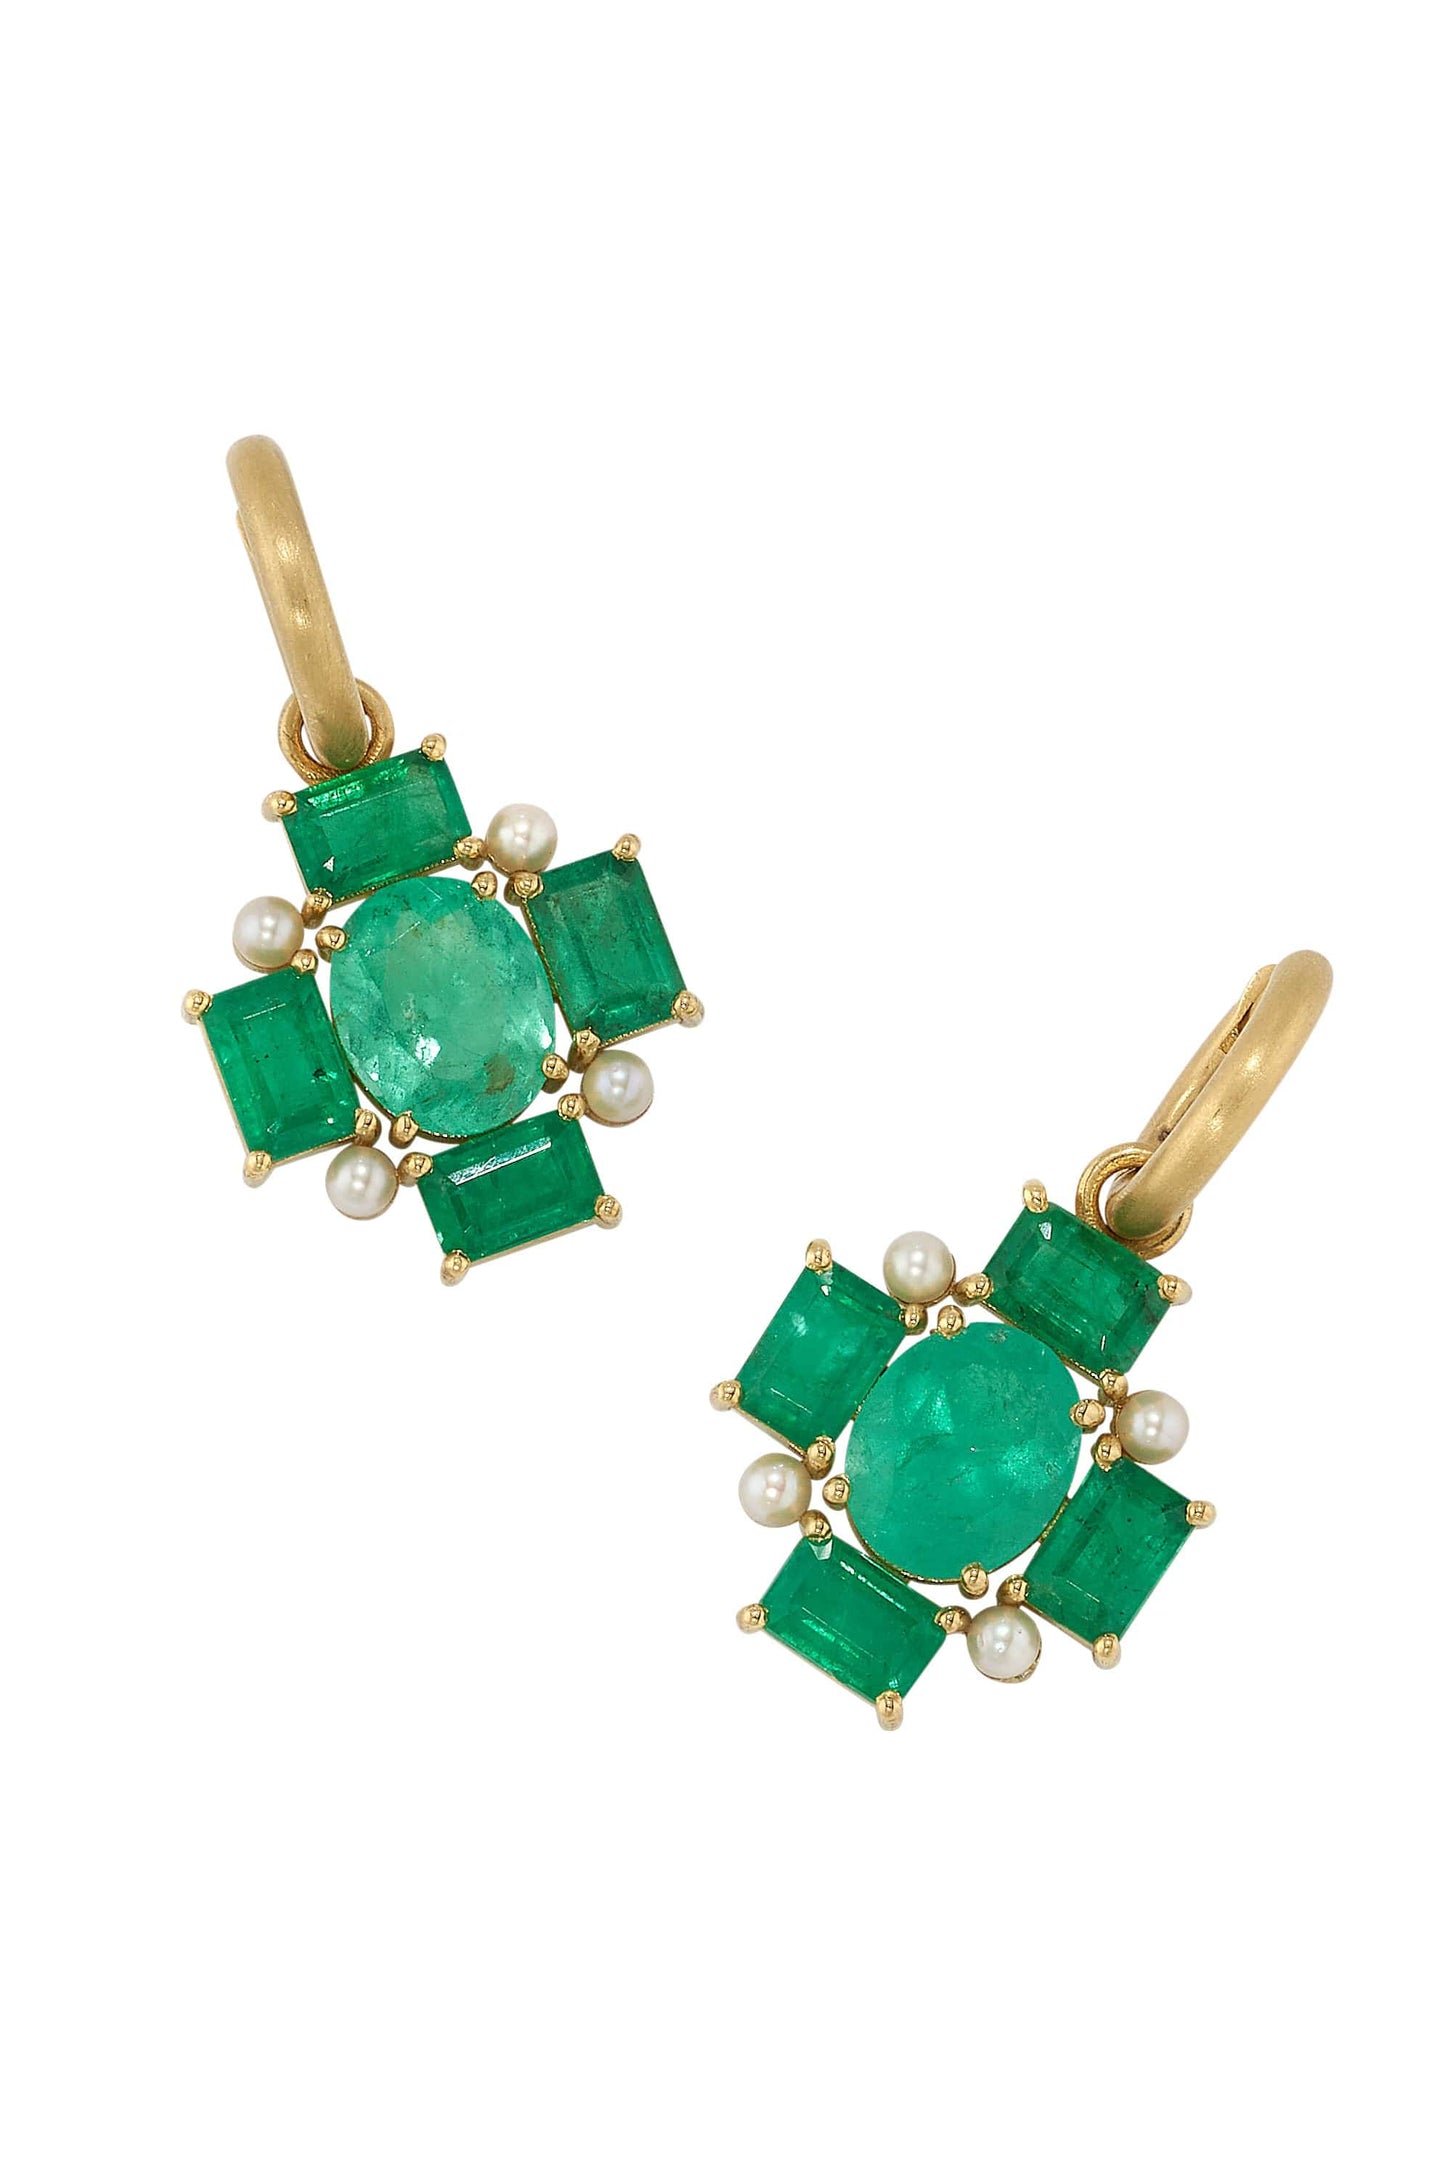 IRENE NEUWIRTH JEWELRY-Emerald and Akoya Pearl Earrings-YELLOW GOLD